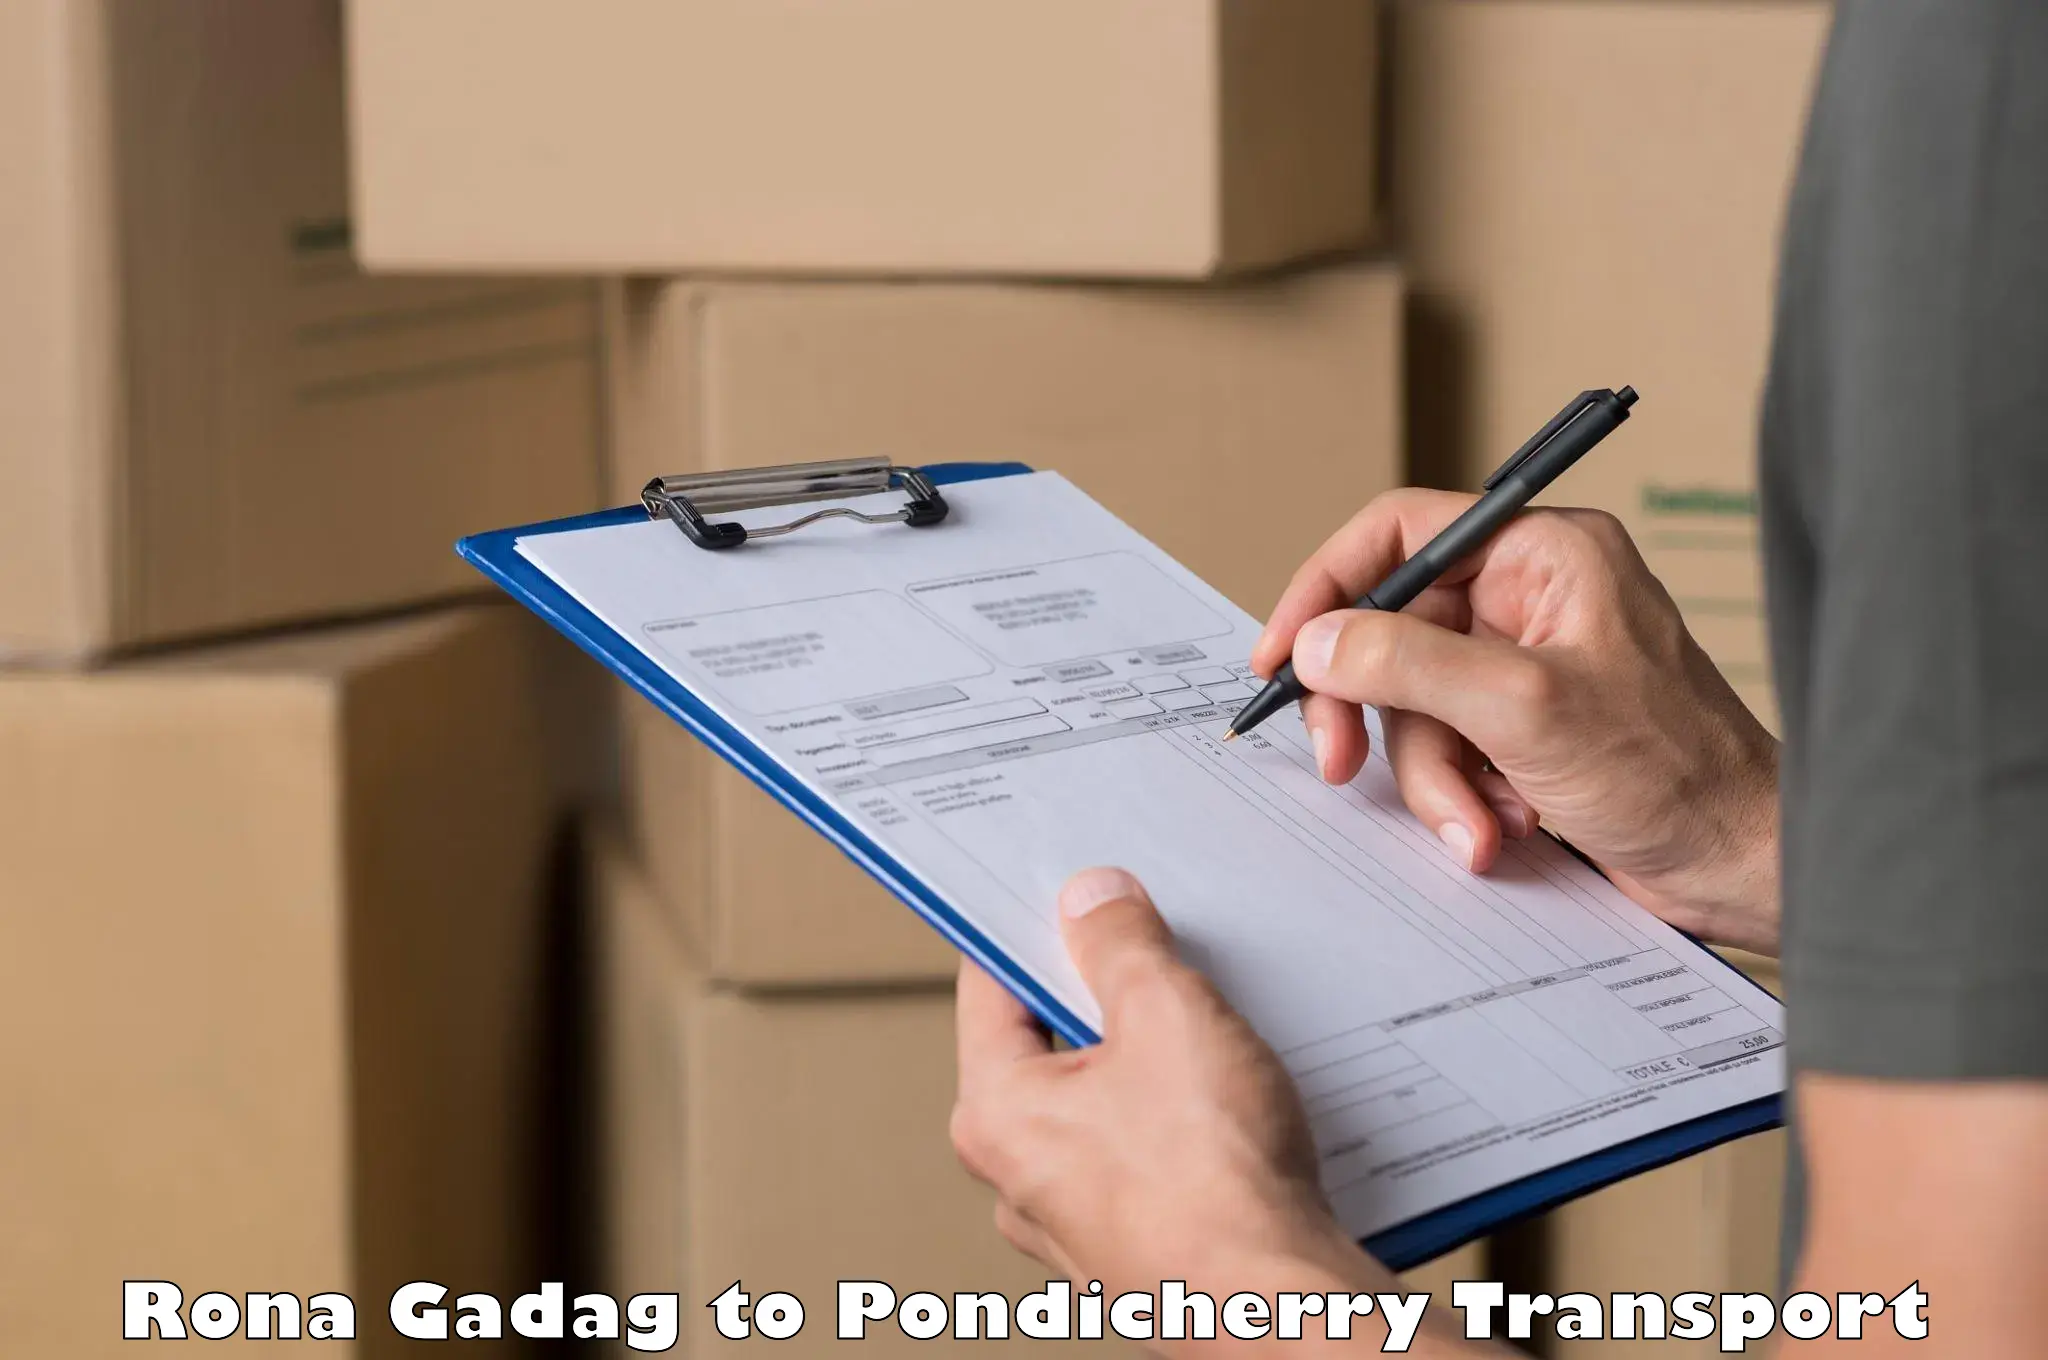 Daily transport service Rona Gadag to Pondicherry